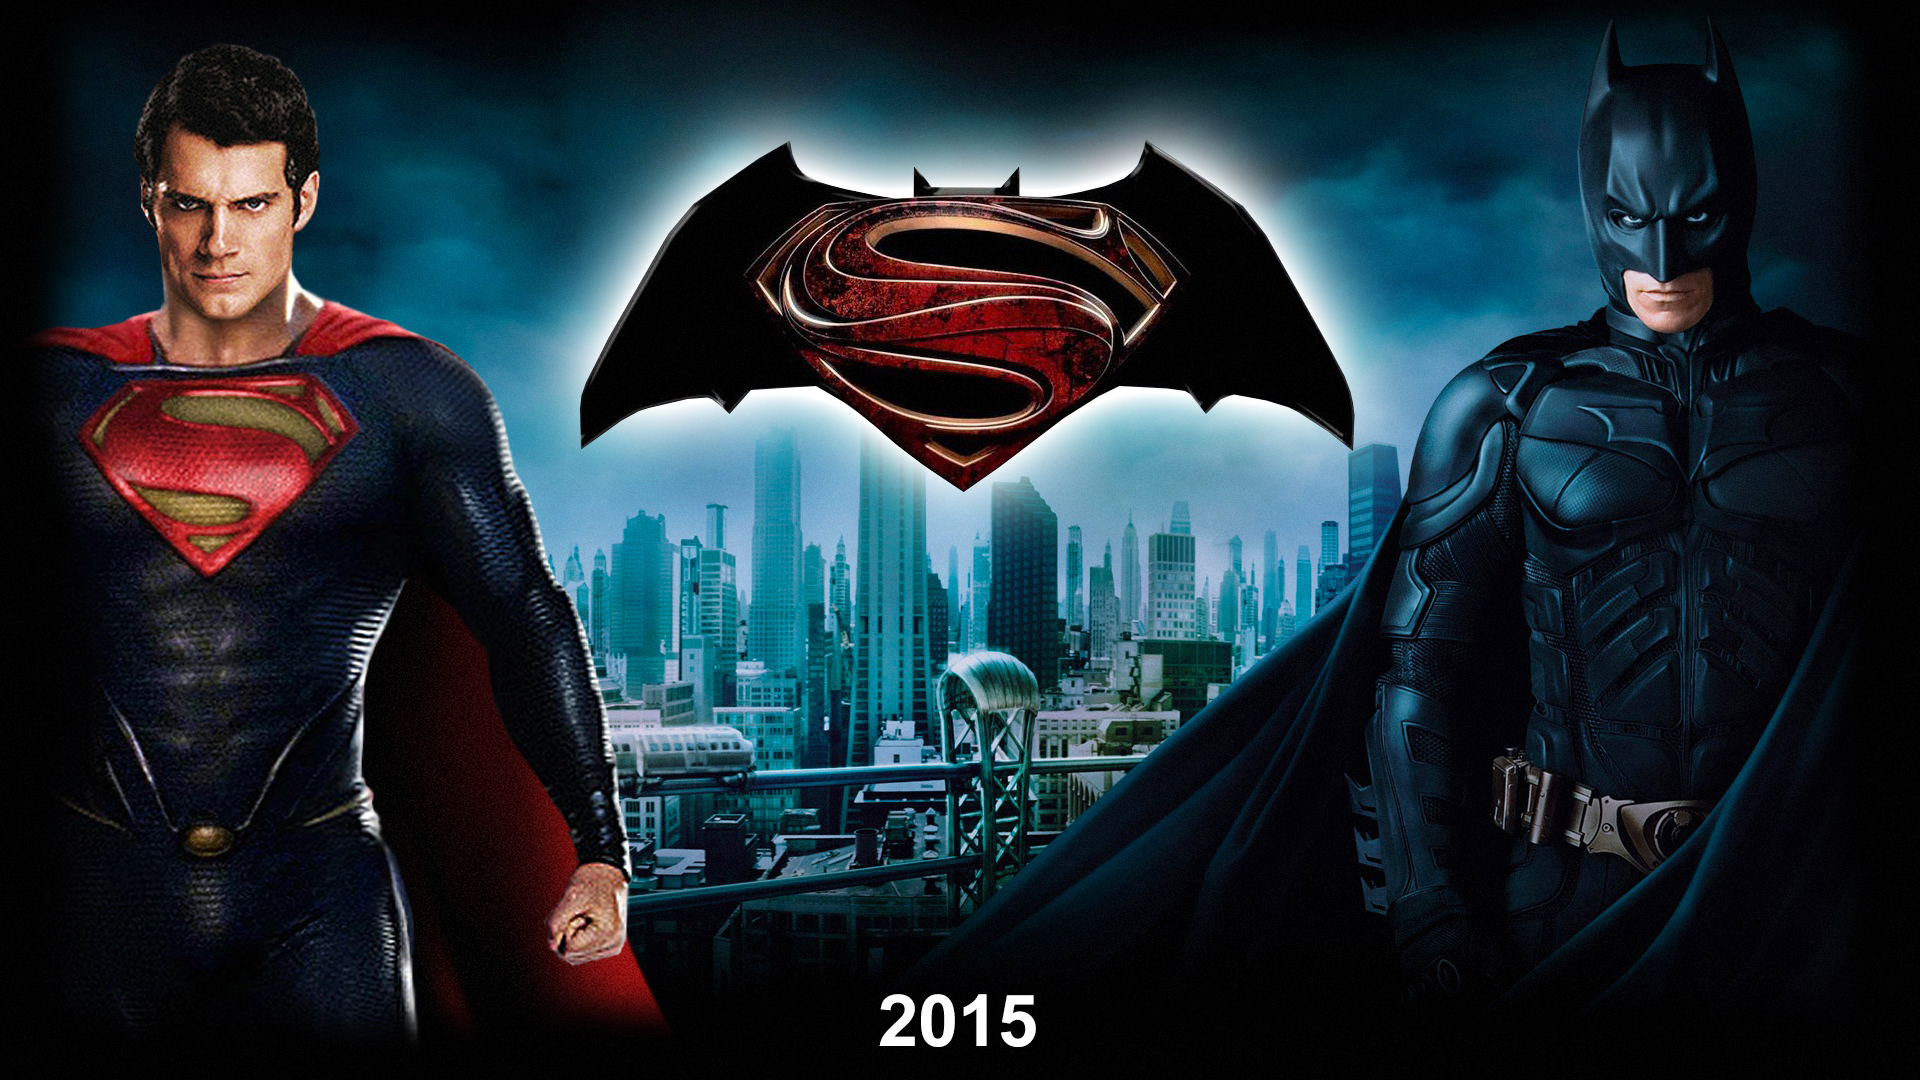 download batman vs superman movie mp4